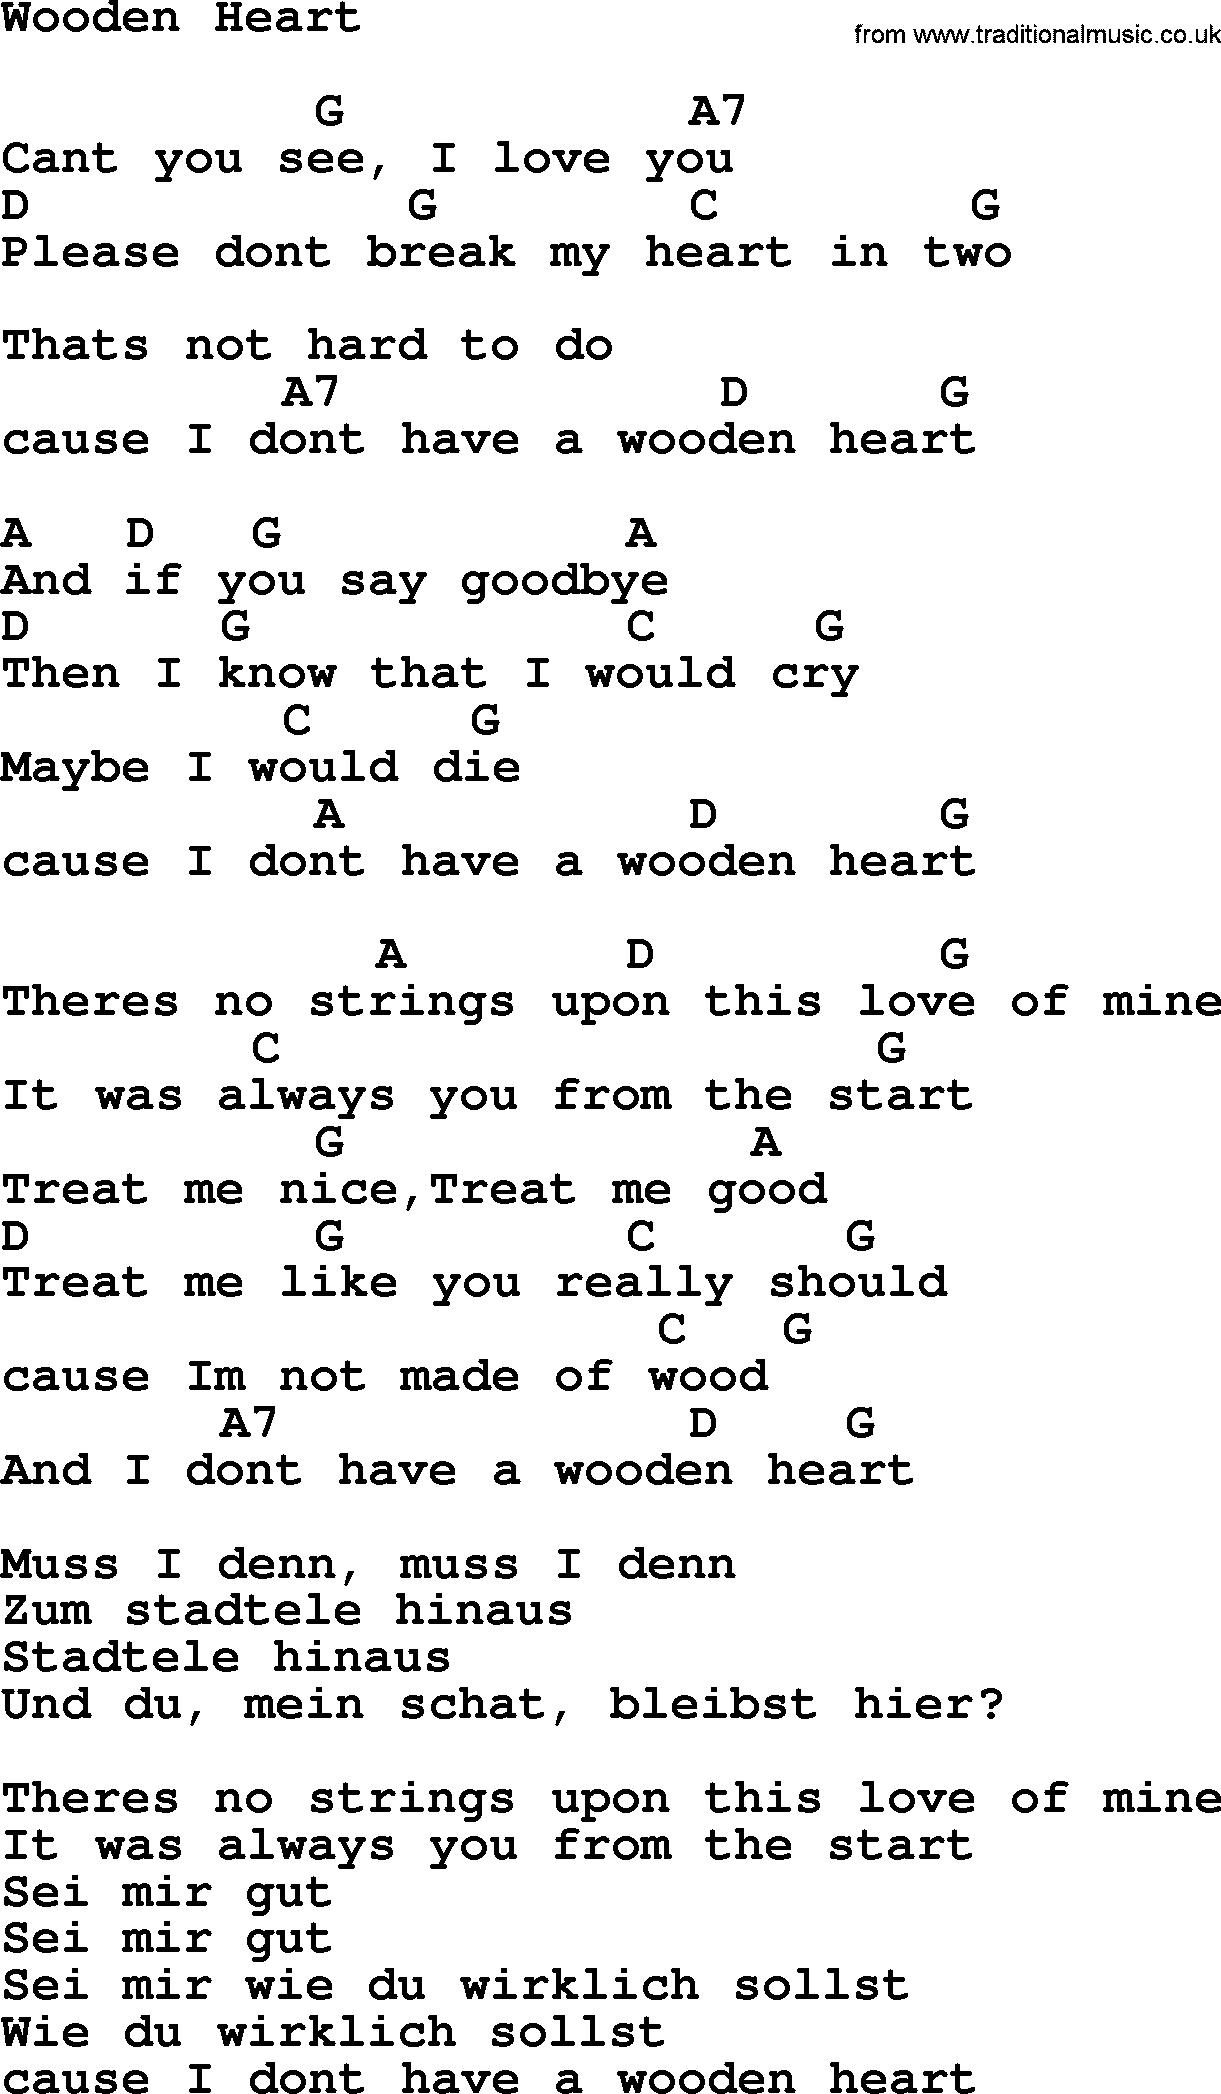 Elvis Presley song: Wooden Heart, lyrics and chords